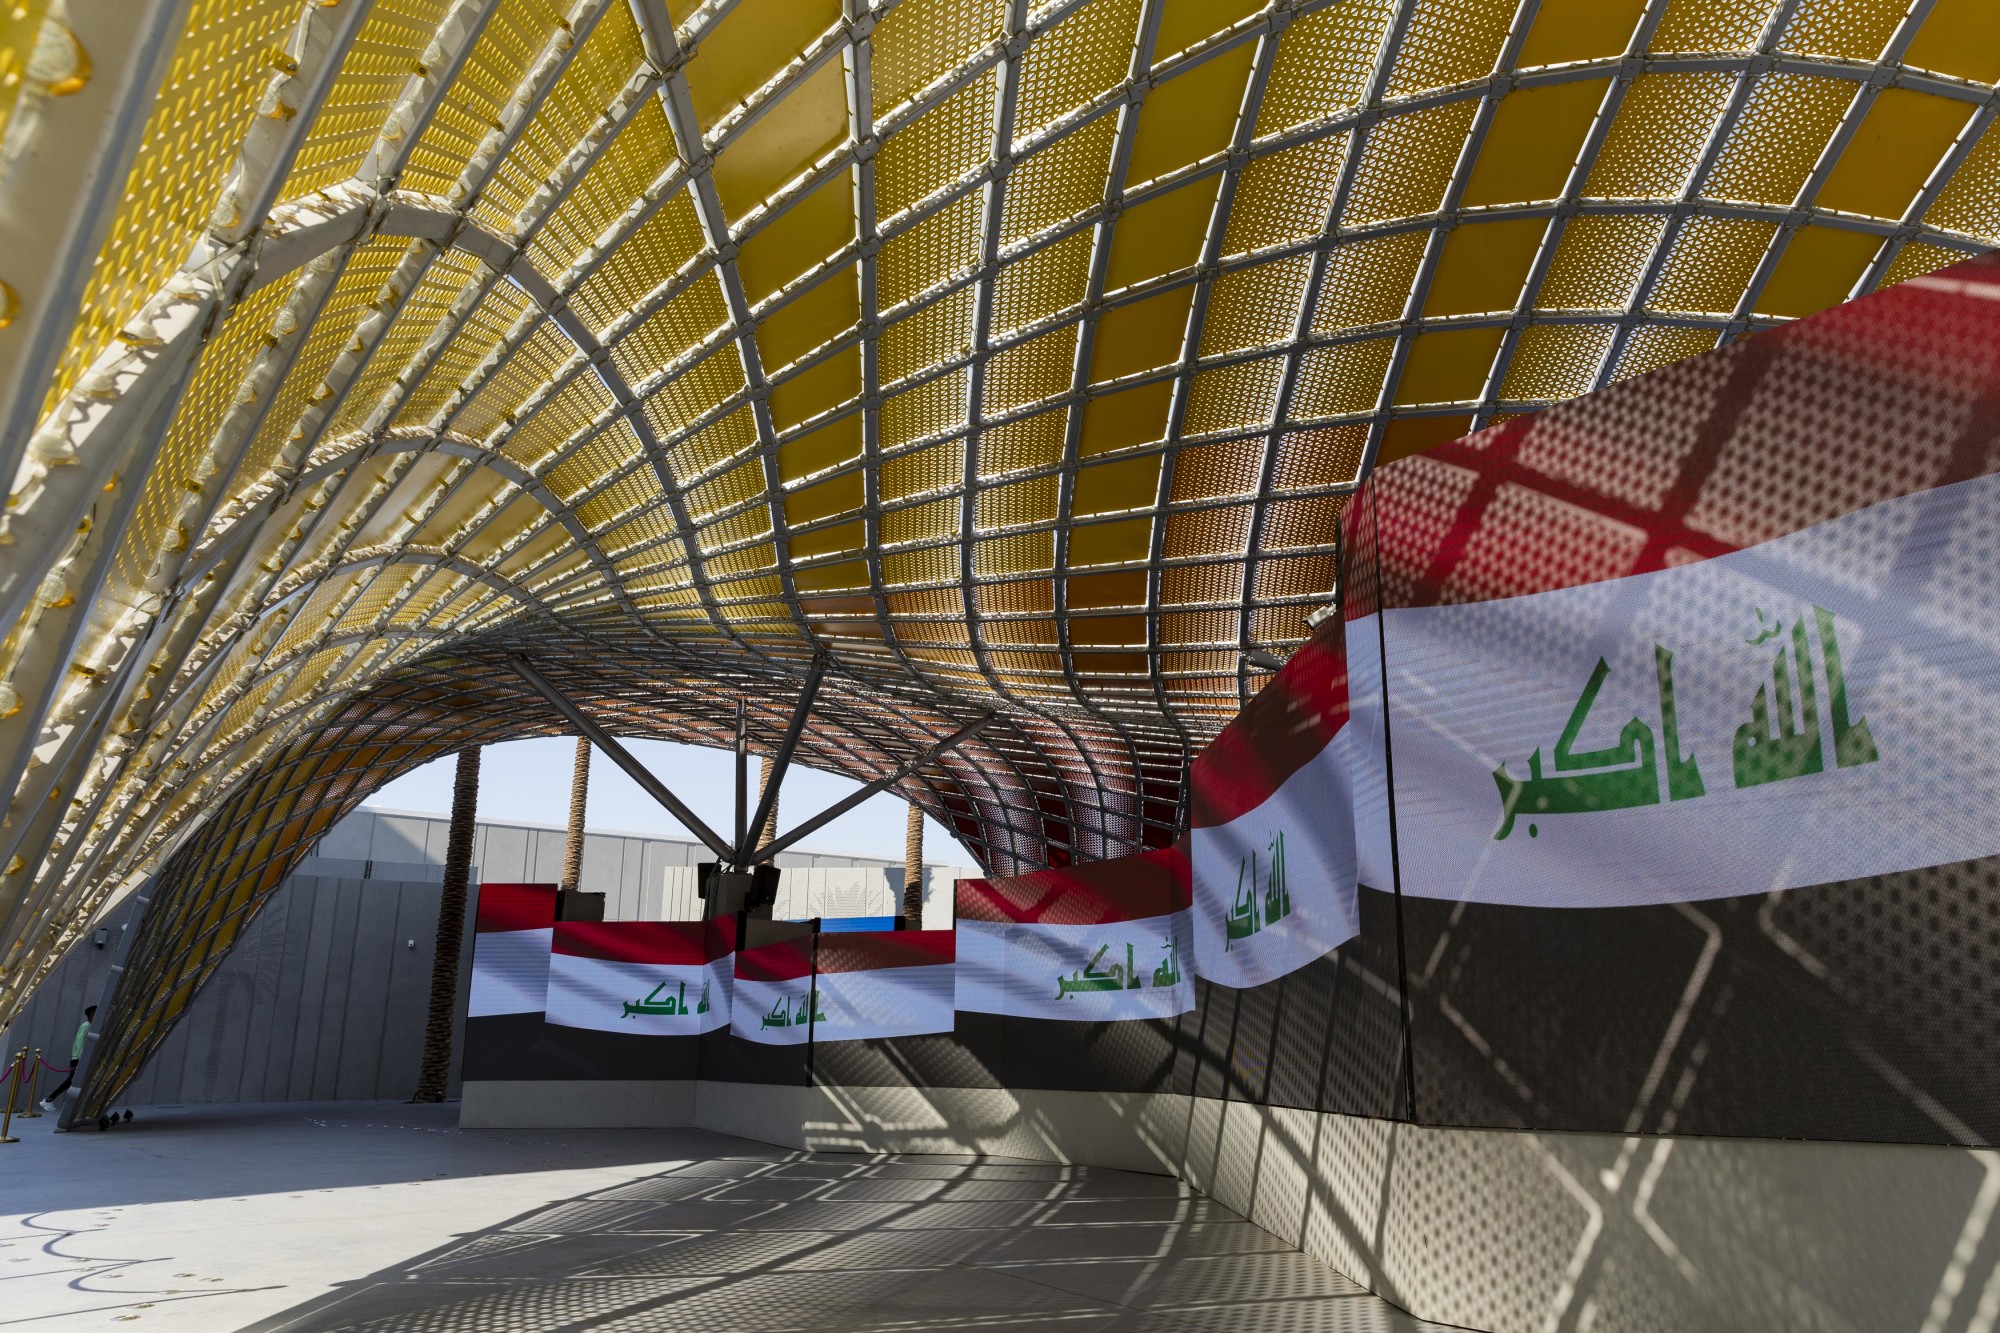 Iraq Pavilion Web Image m18005